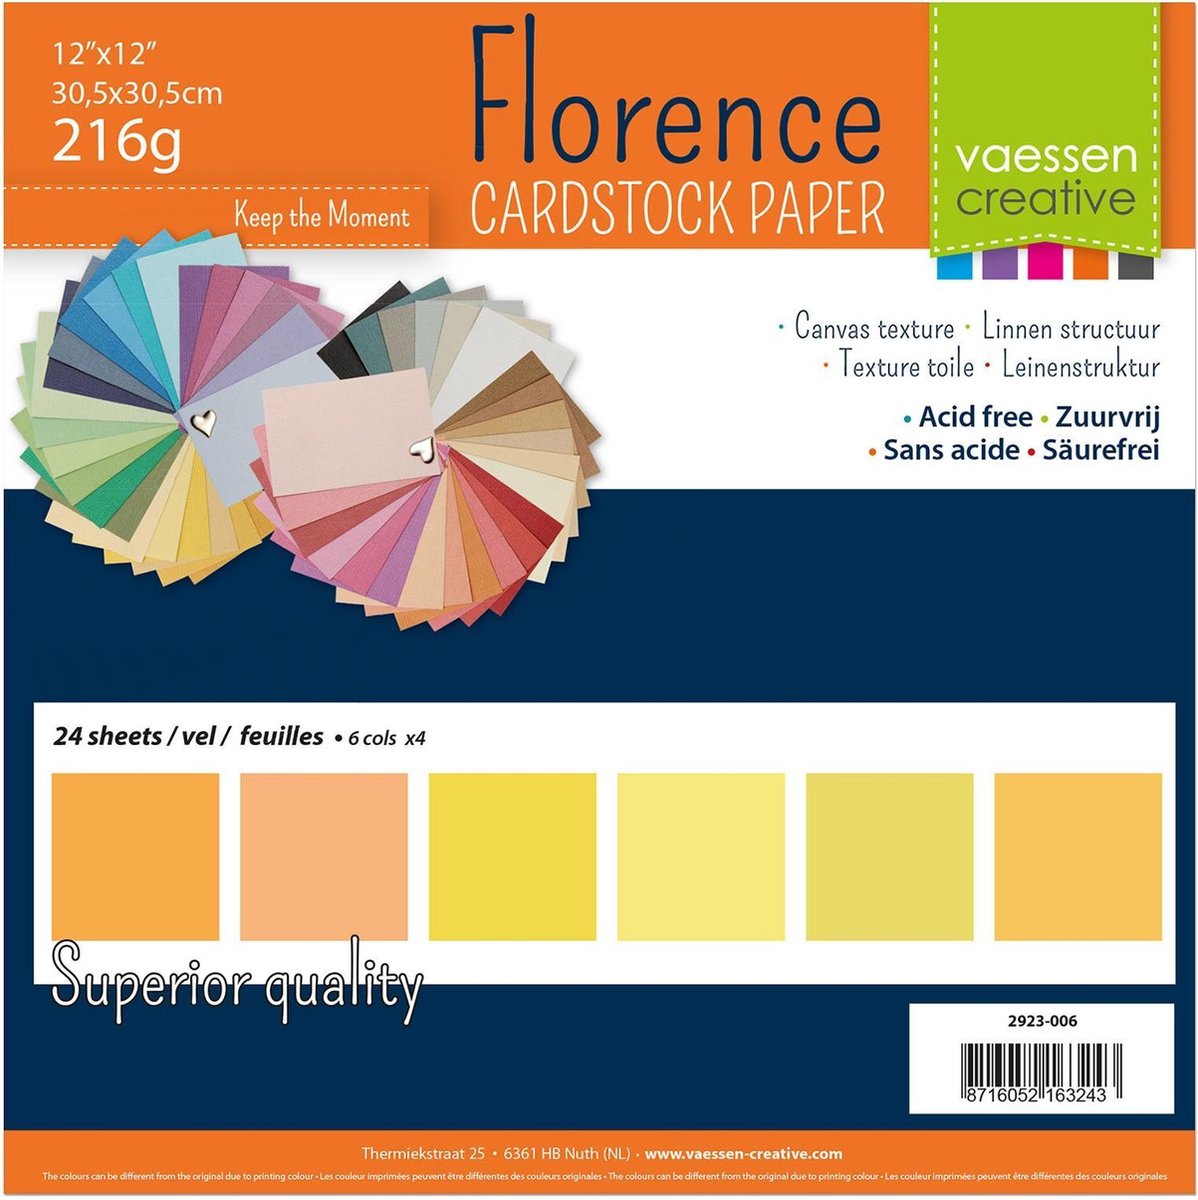 Vaessen Creative Florence Cardstock, Stevig Kaartpapier 216g - Geel, 24 Stuks. 30,5 x 30,5 cm